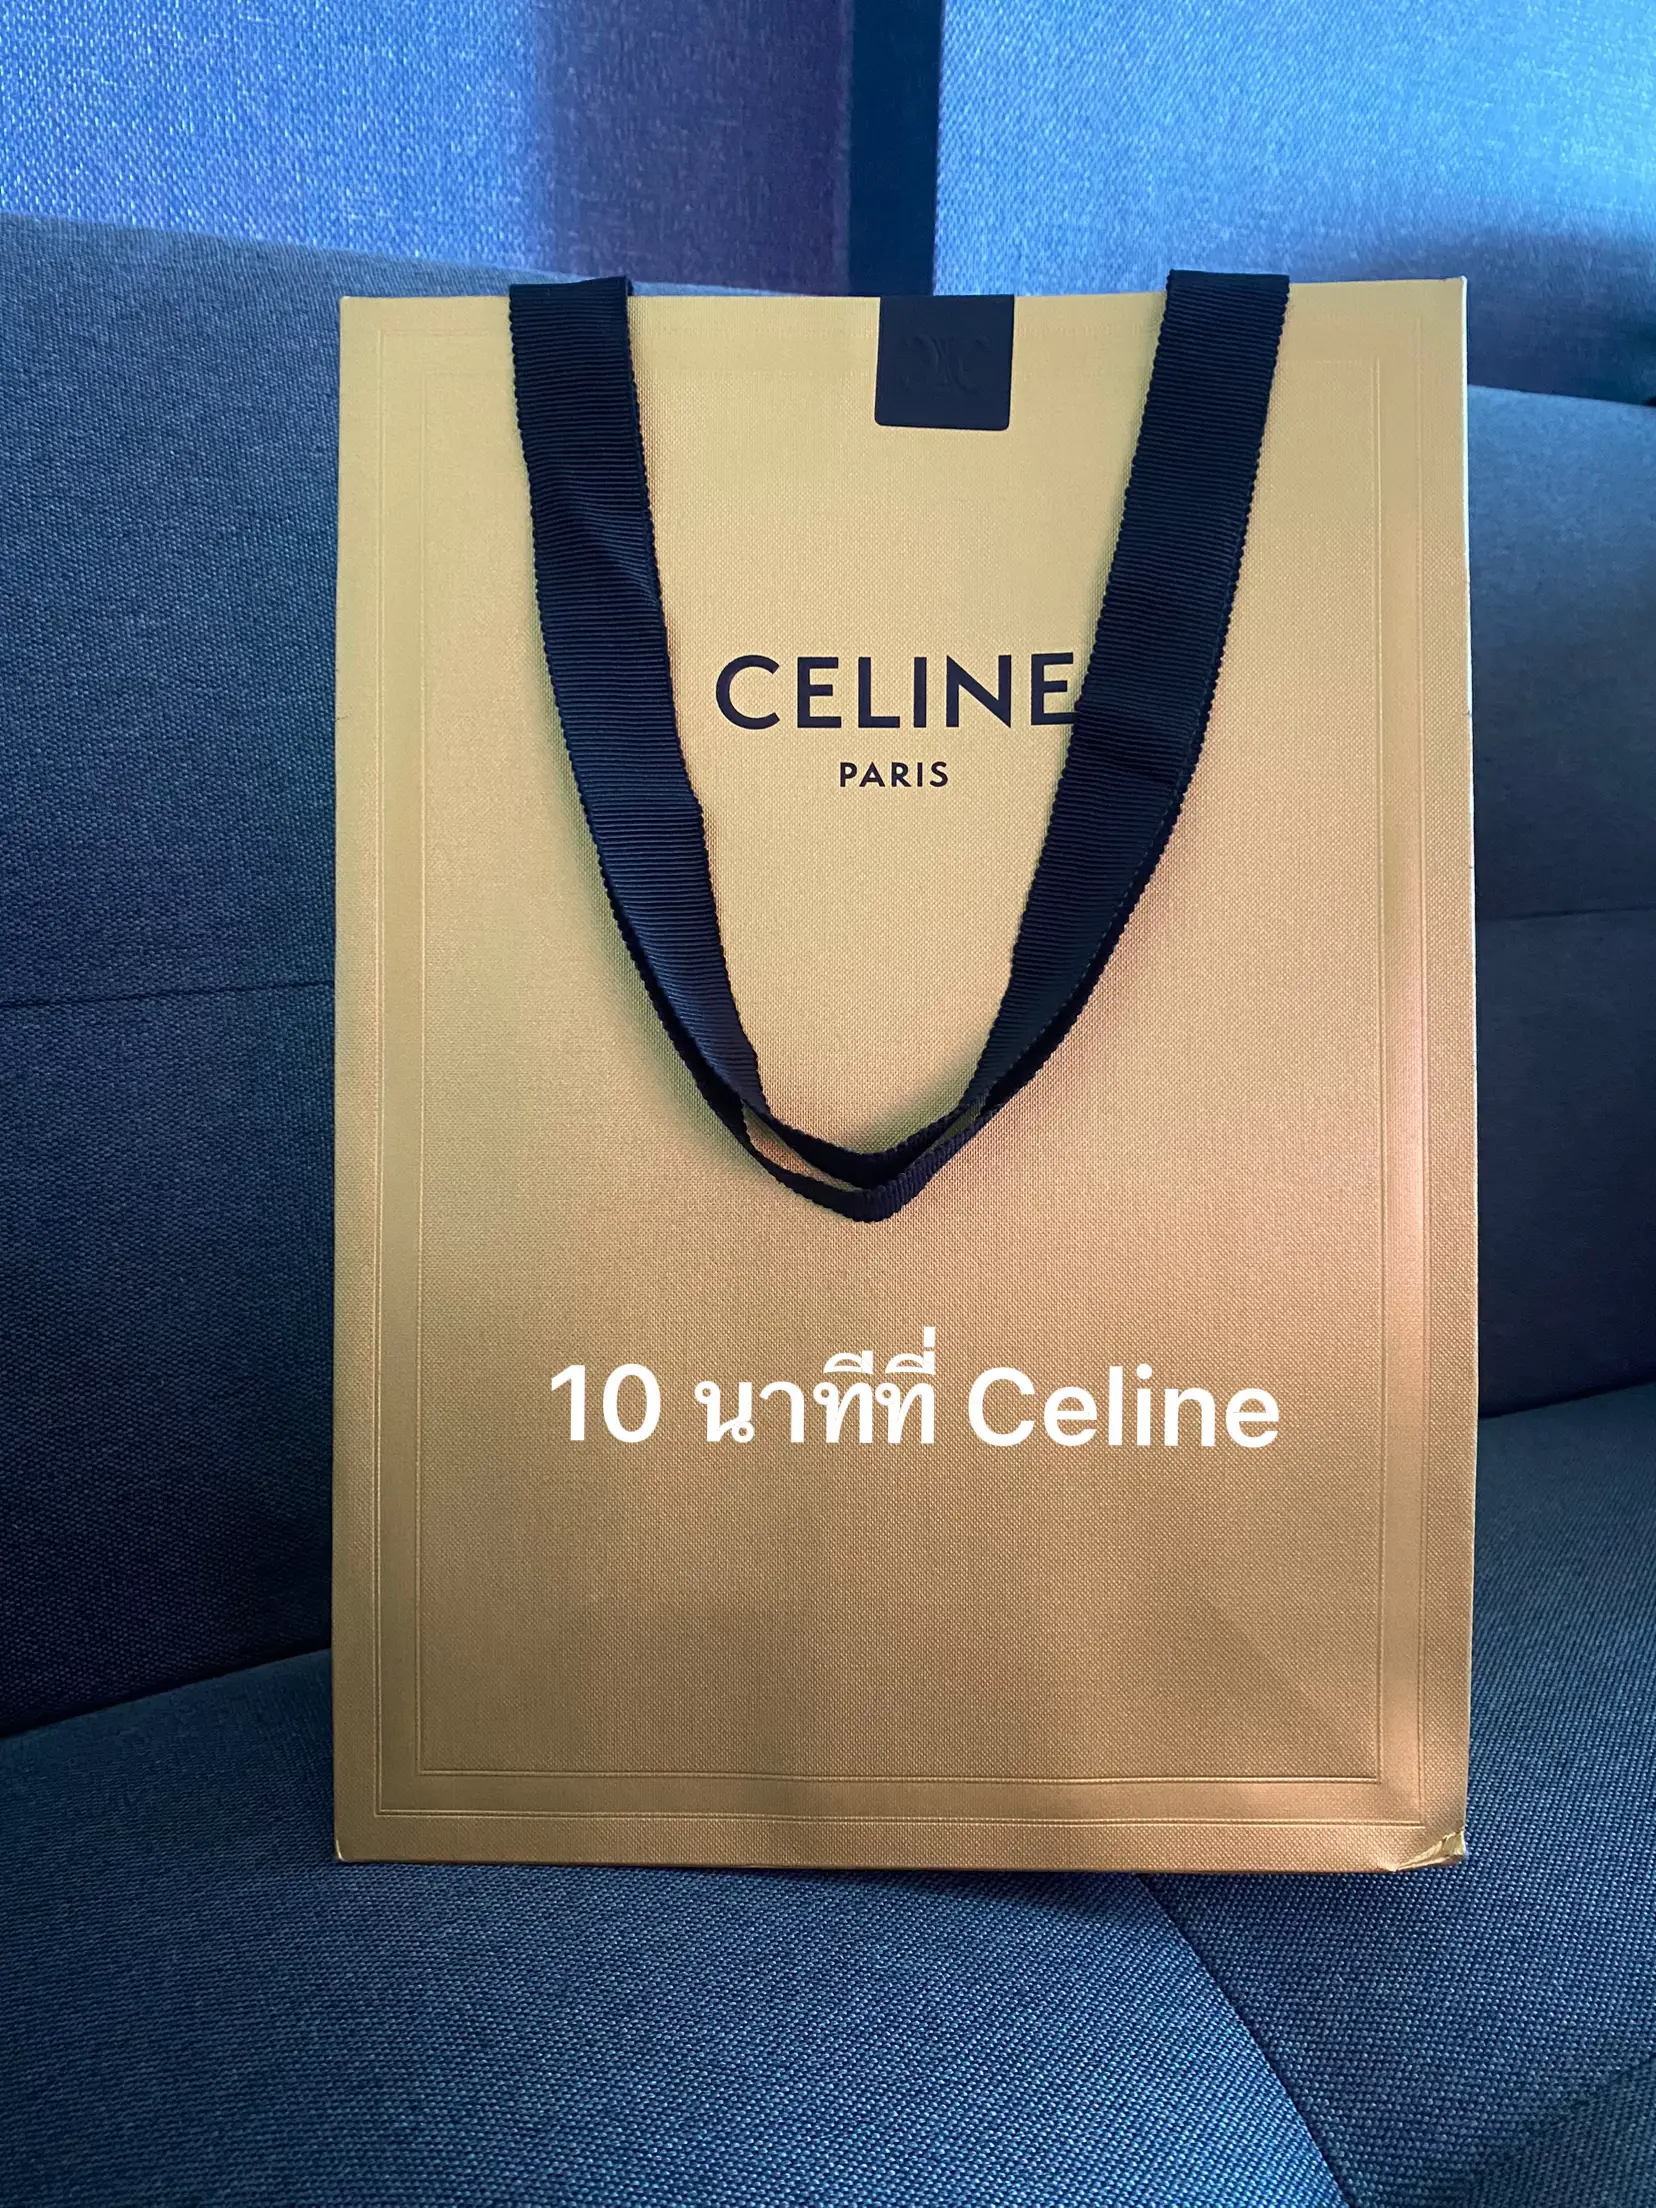 Celine Shop at Emquatier, Bangkok, Thailand, Oct 7, 2017 : Luxury and  Fashionable Brand Interior. Editorial Image - Image of exclusive, modern:  102886550